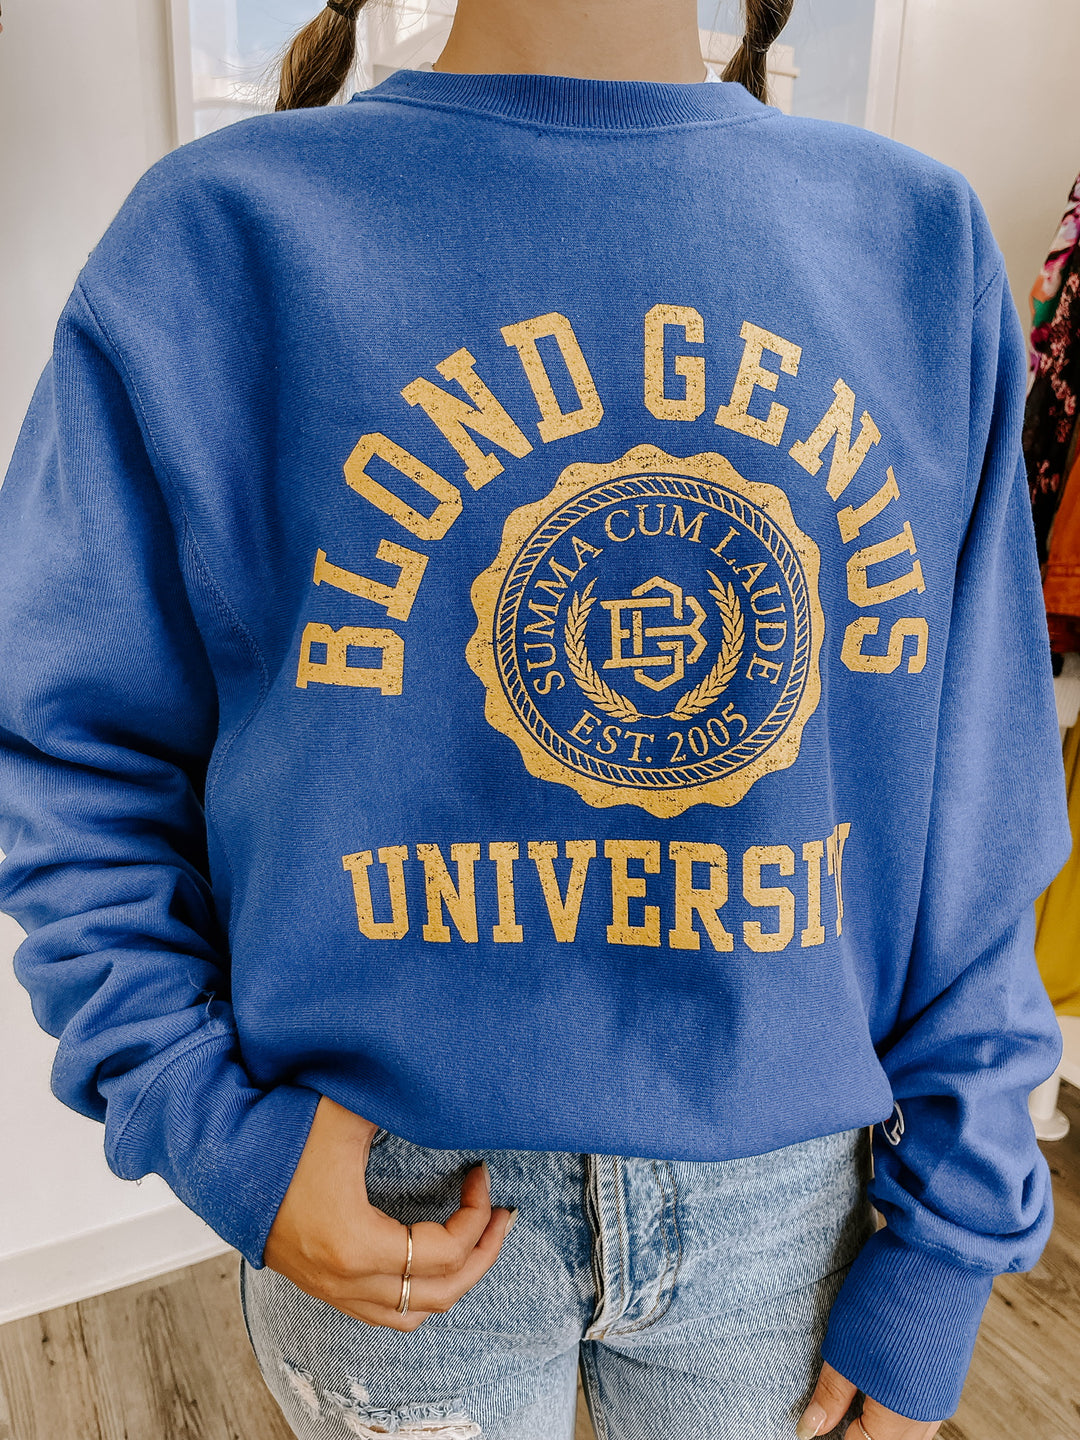 Blond Genius - Blond Genius University in Royal Blue with Yellow